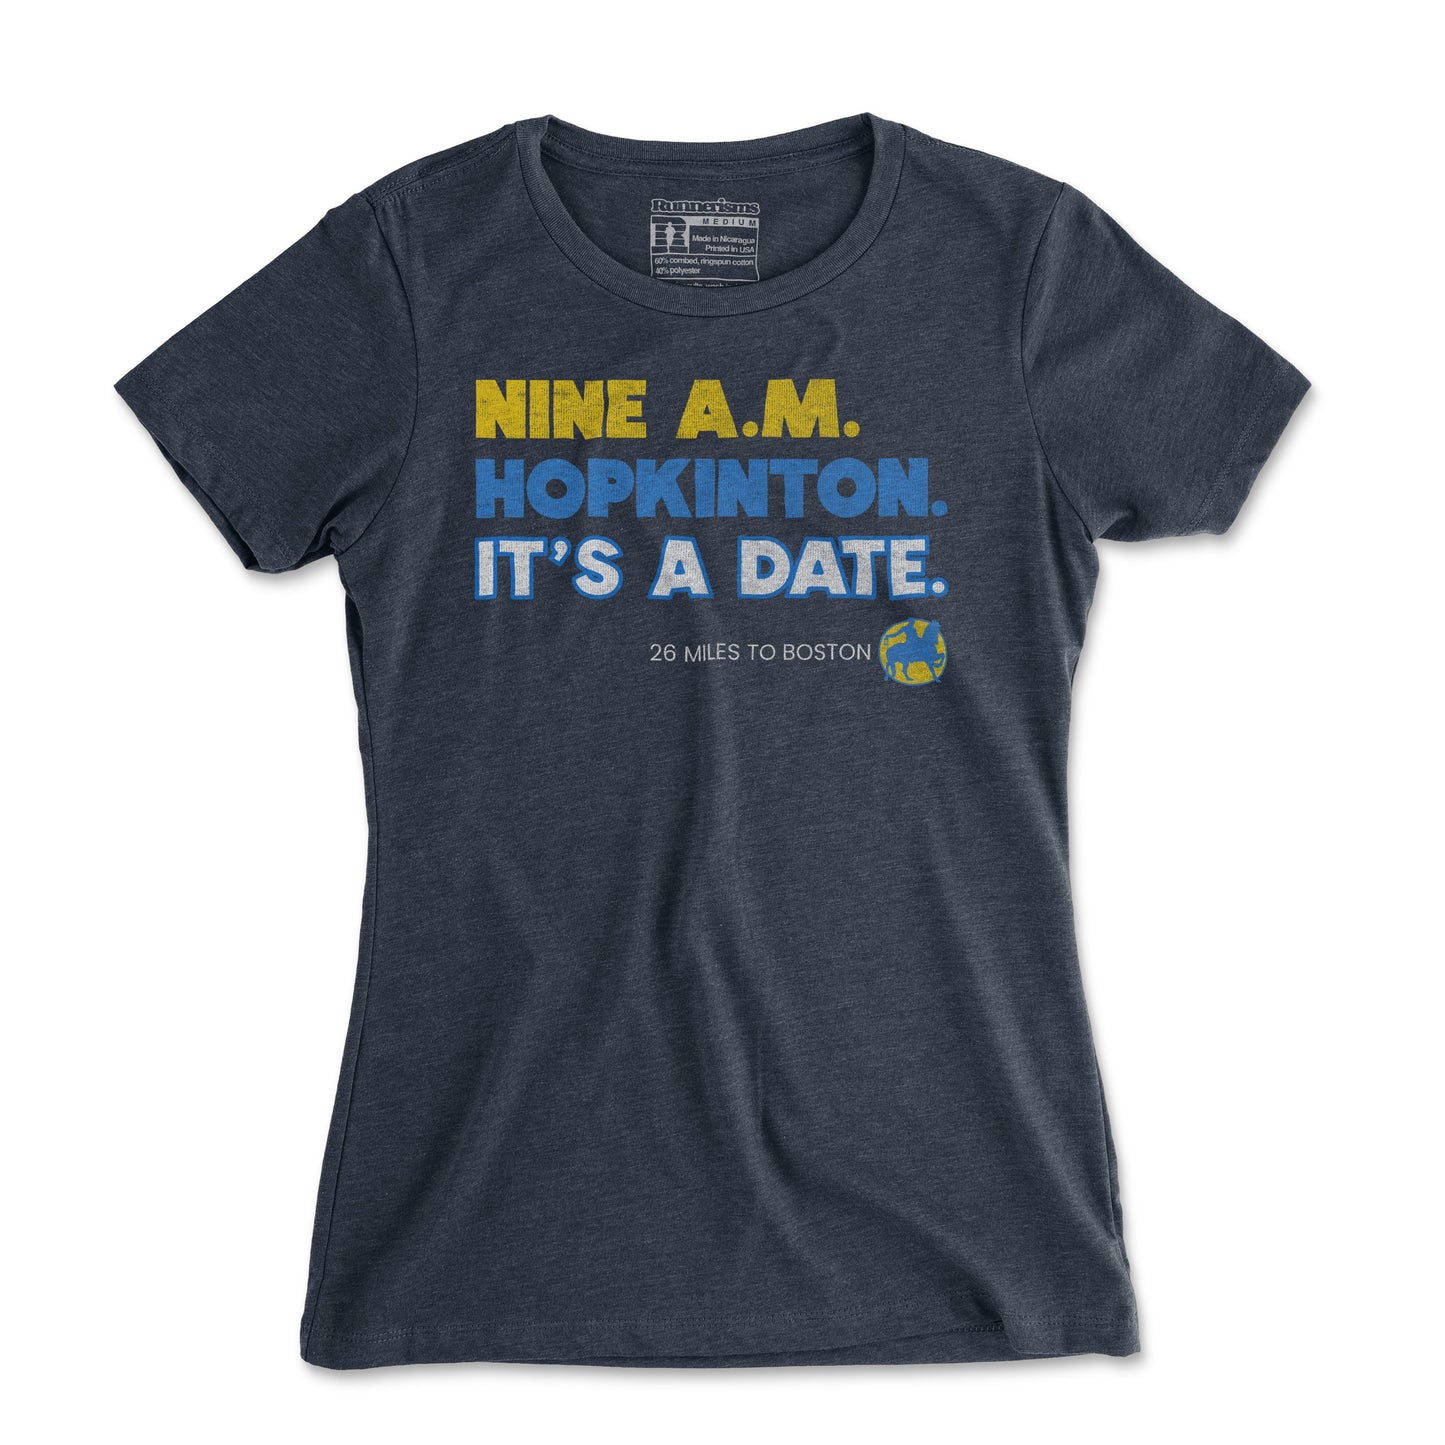 9 AM. Hopkinton. It's A Date - Women's T Shirt